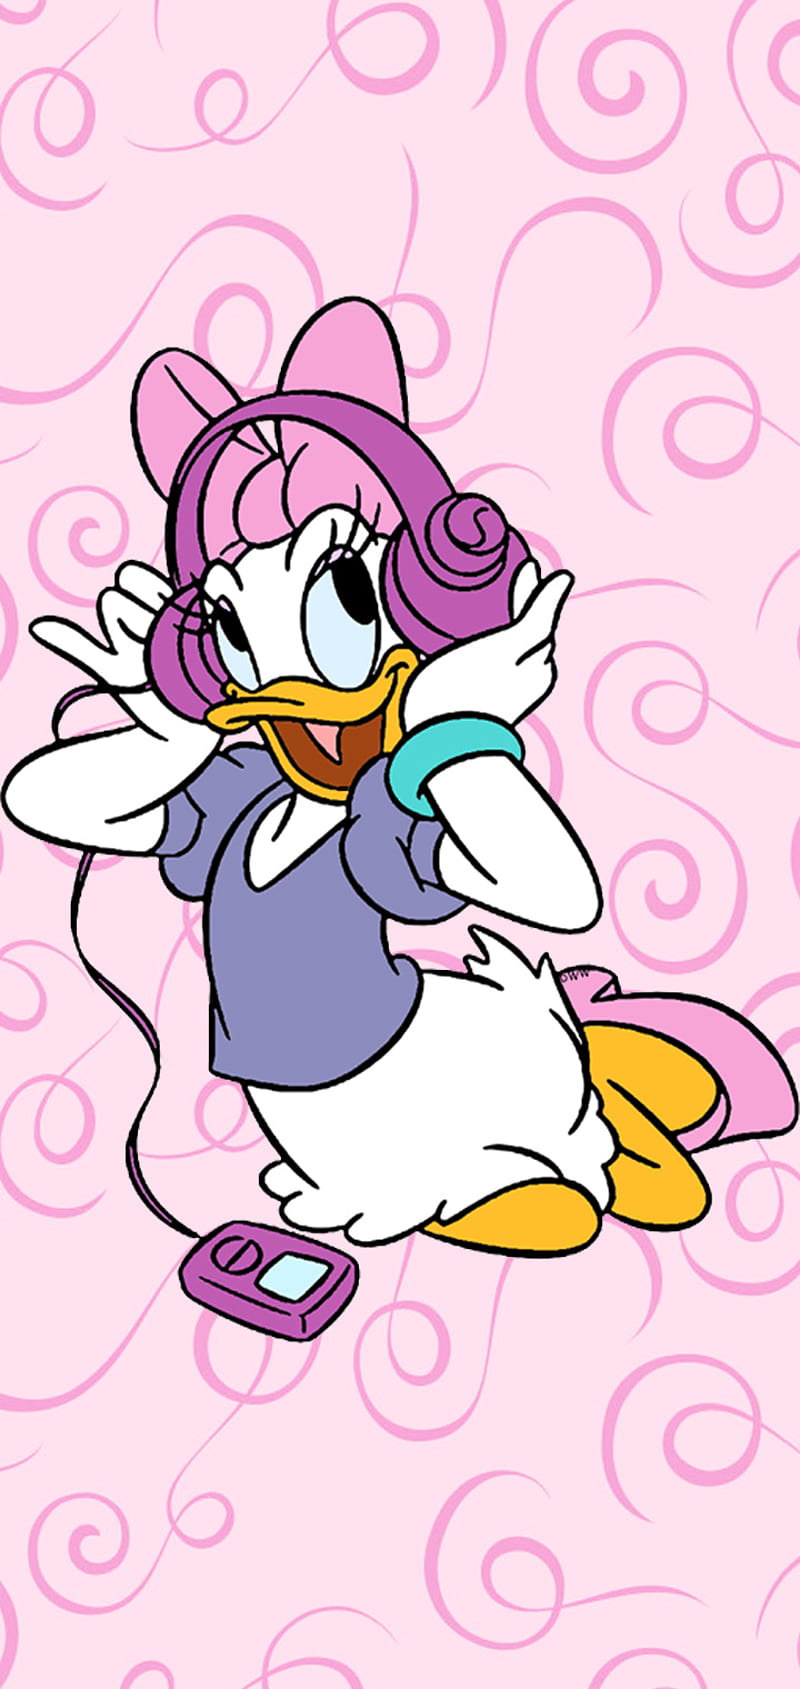 720p Free Download Daisy Duck 29 Cartoon Daisy Duck Hd Phone